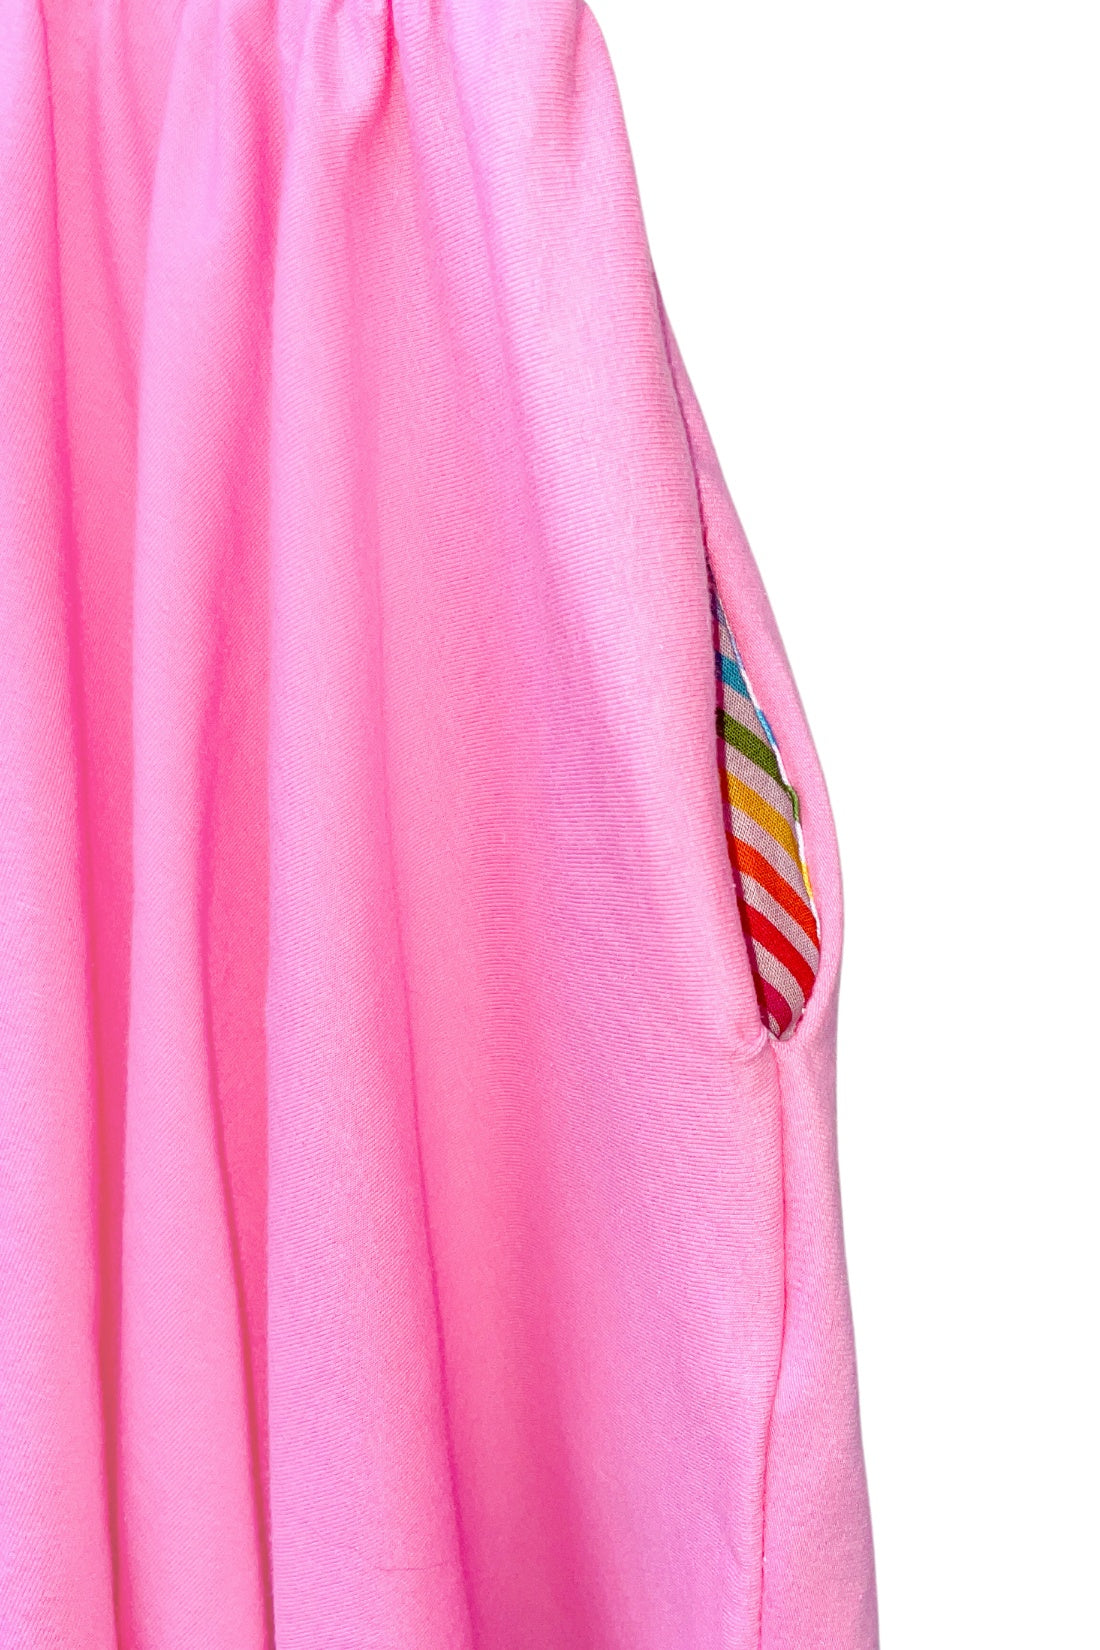 Rainbow Pride Twirl Cotton Plus Size Dress